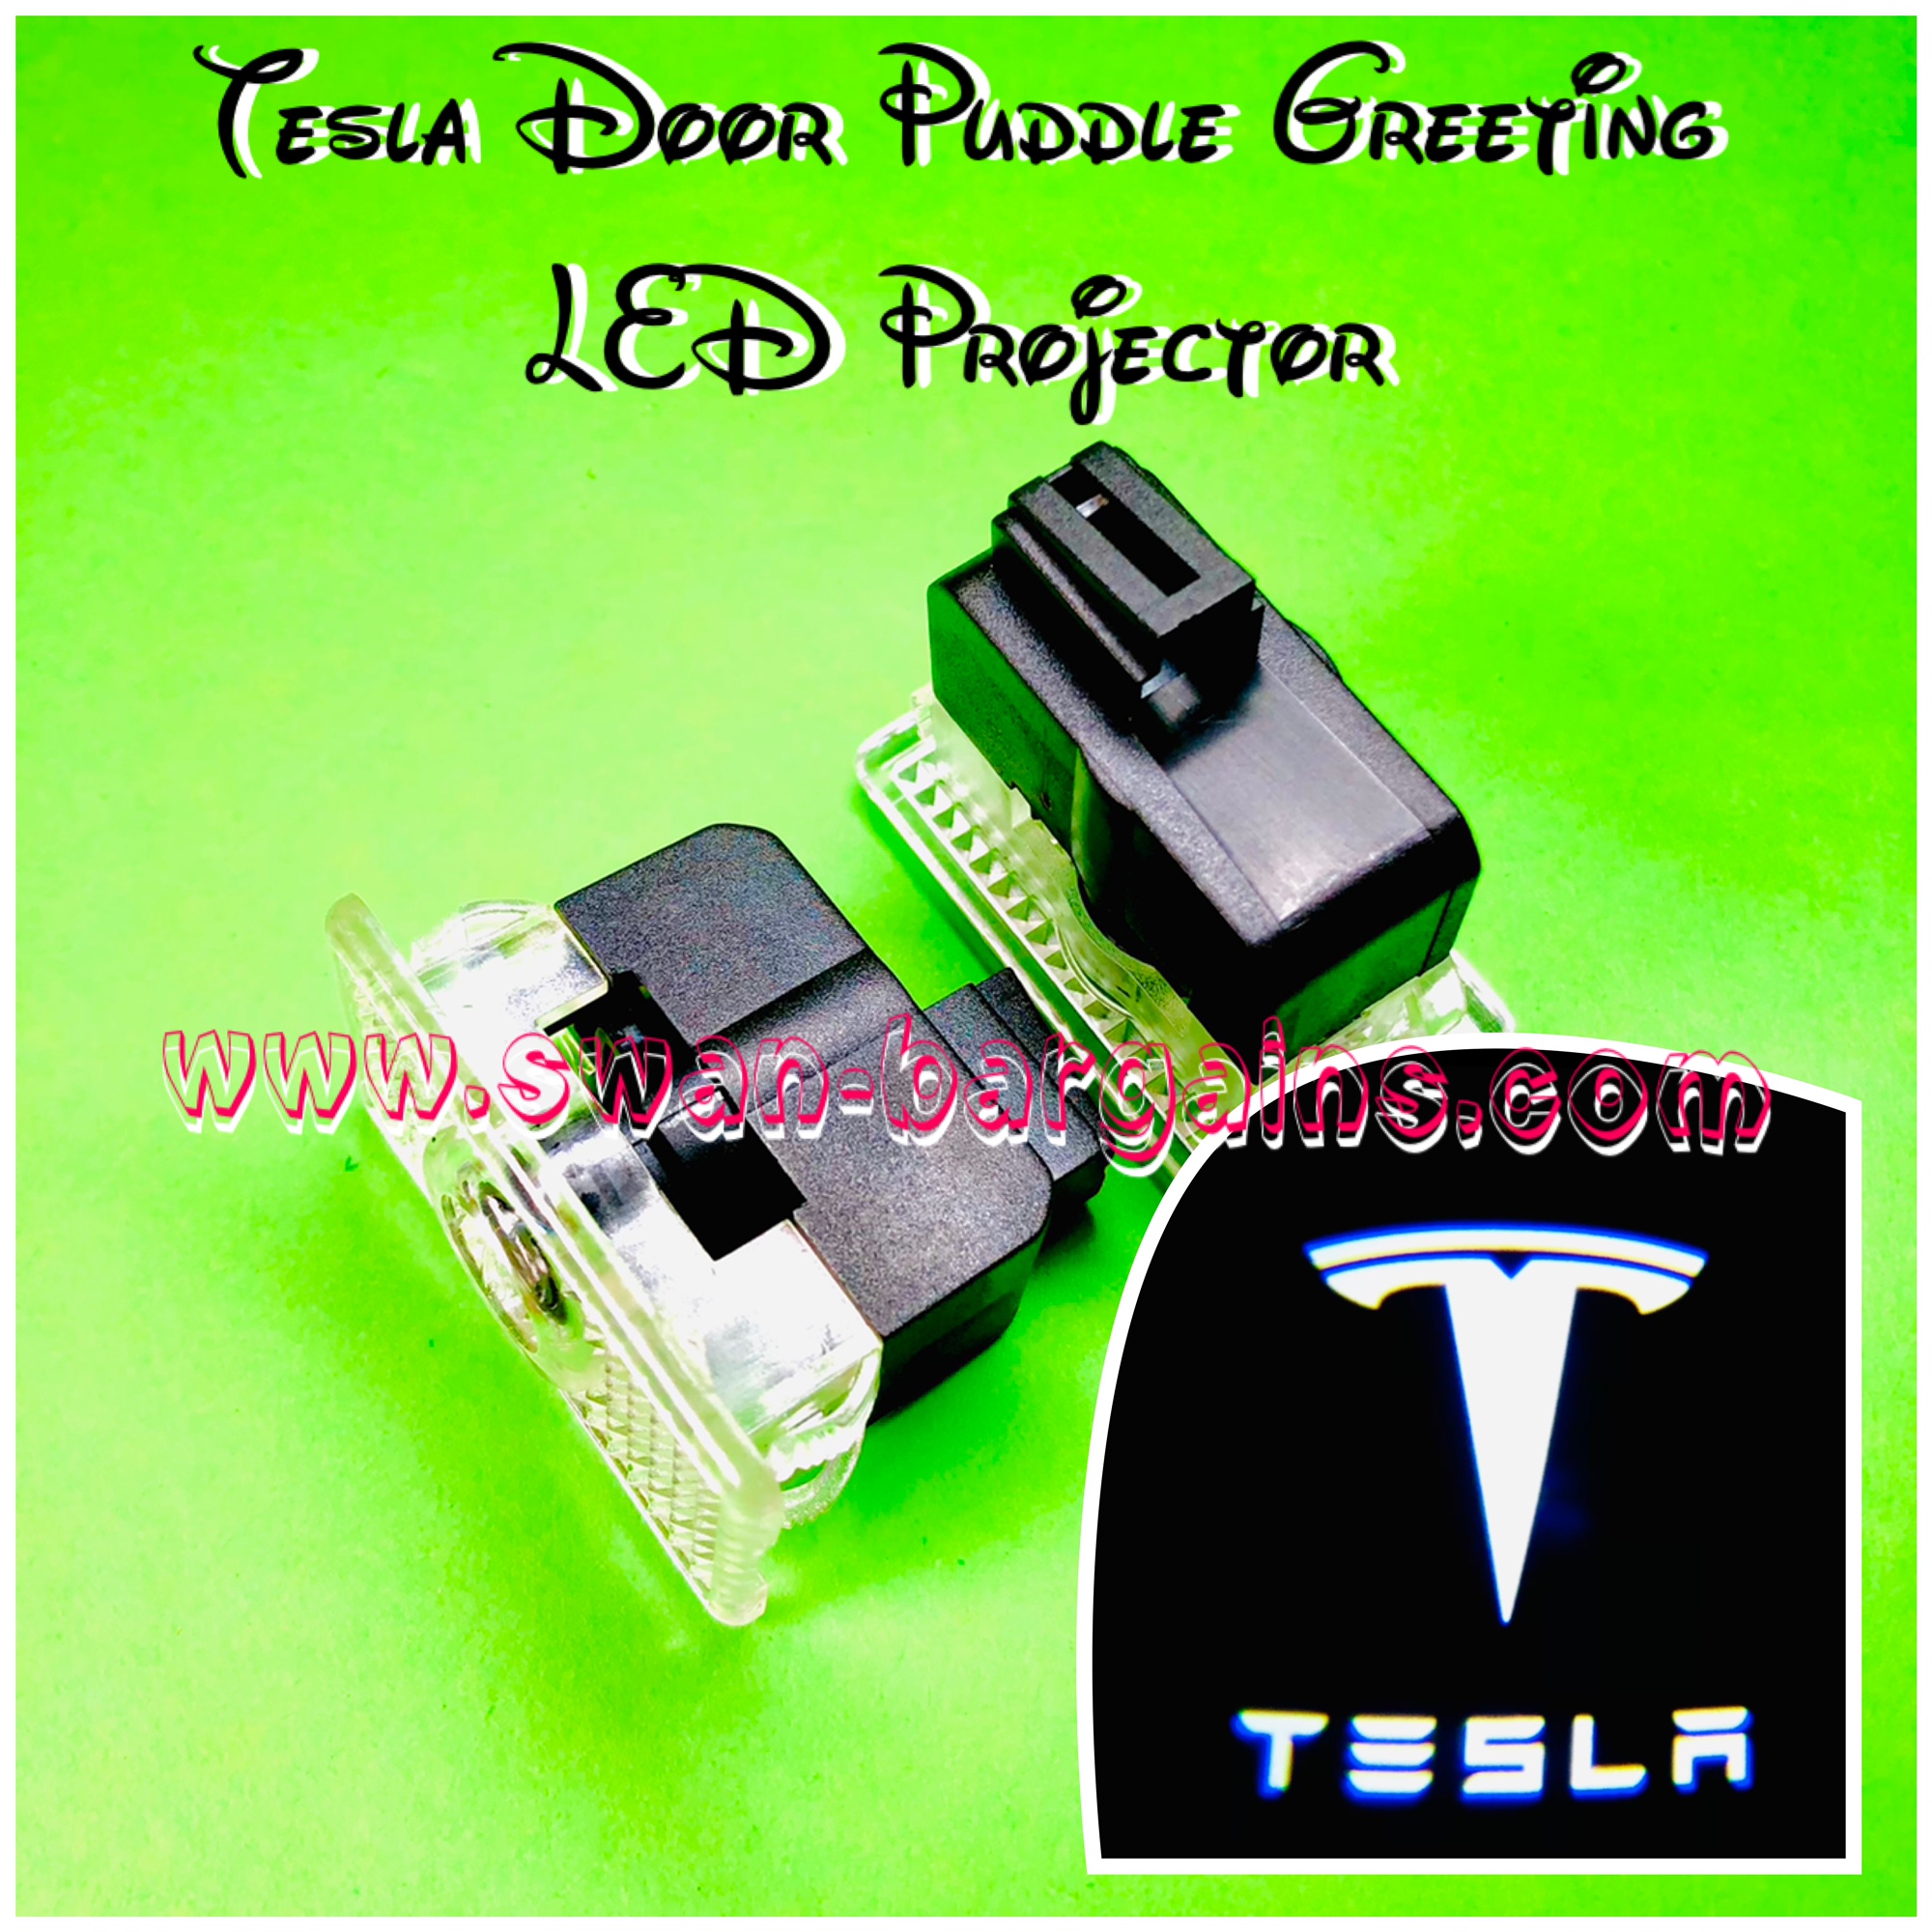 Tesla Door Puddle Light LED Projector Lamp